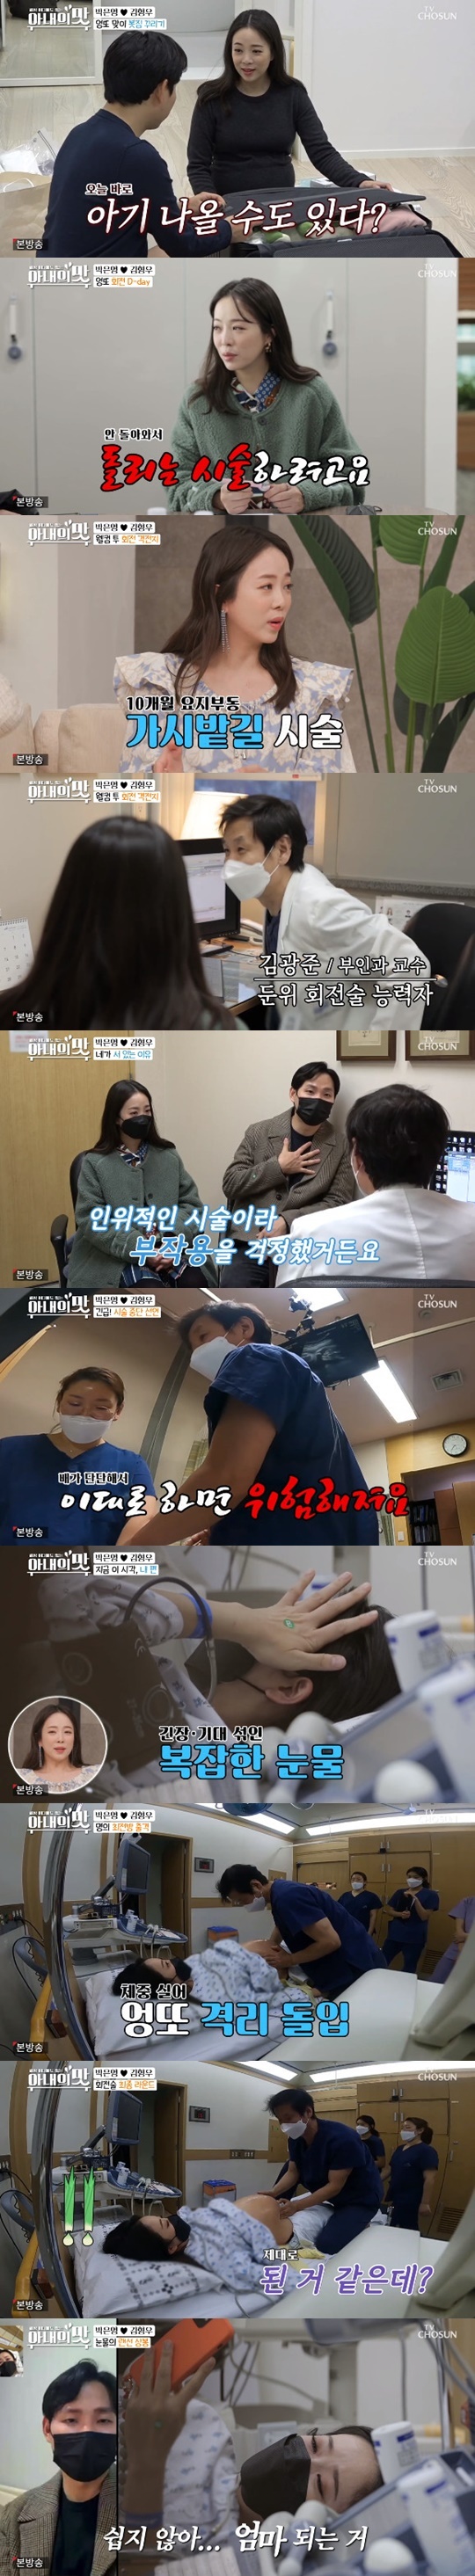 [RE:TV] ‘The taste of wife’ Park Eun-young,’Bonus rotation’ procedure…  Escape from tears